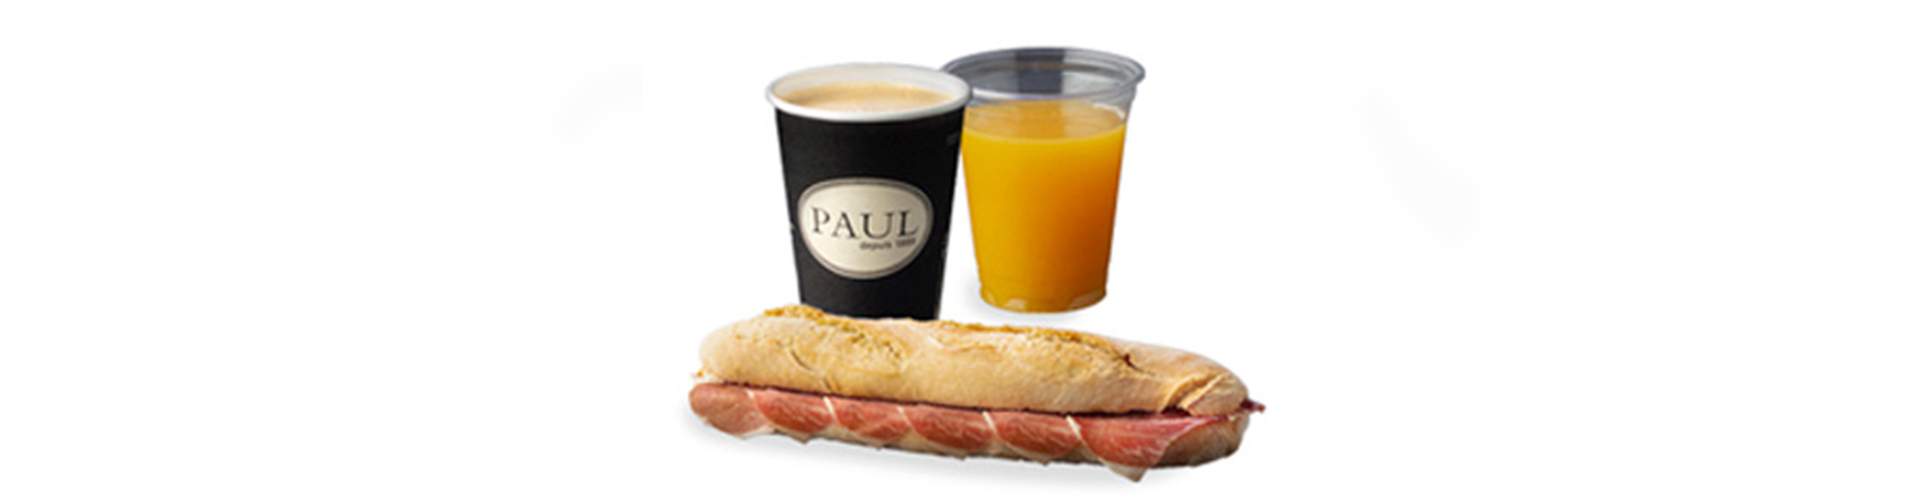 Menu-paleta-espresso-foodpaulbcnt1-40003085